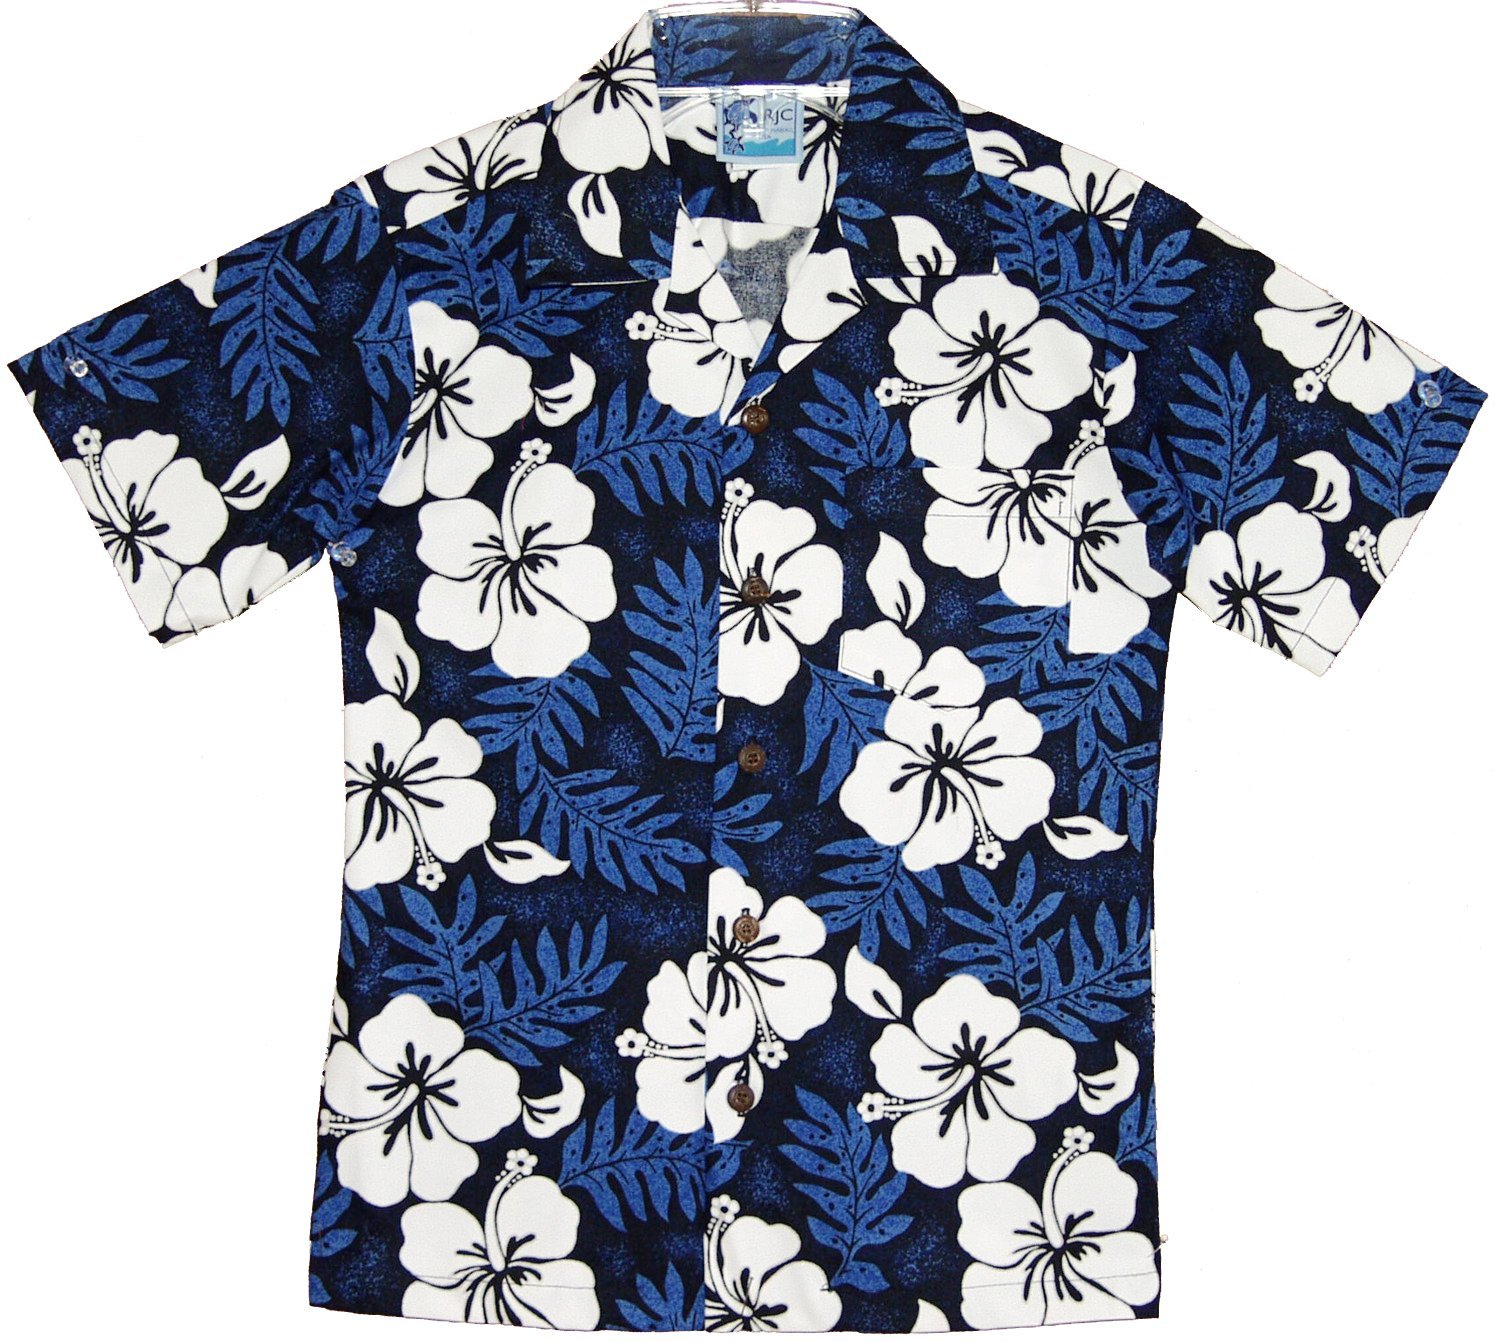 shirt clipart tropical shirt